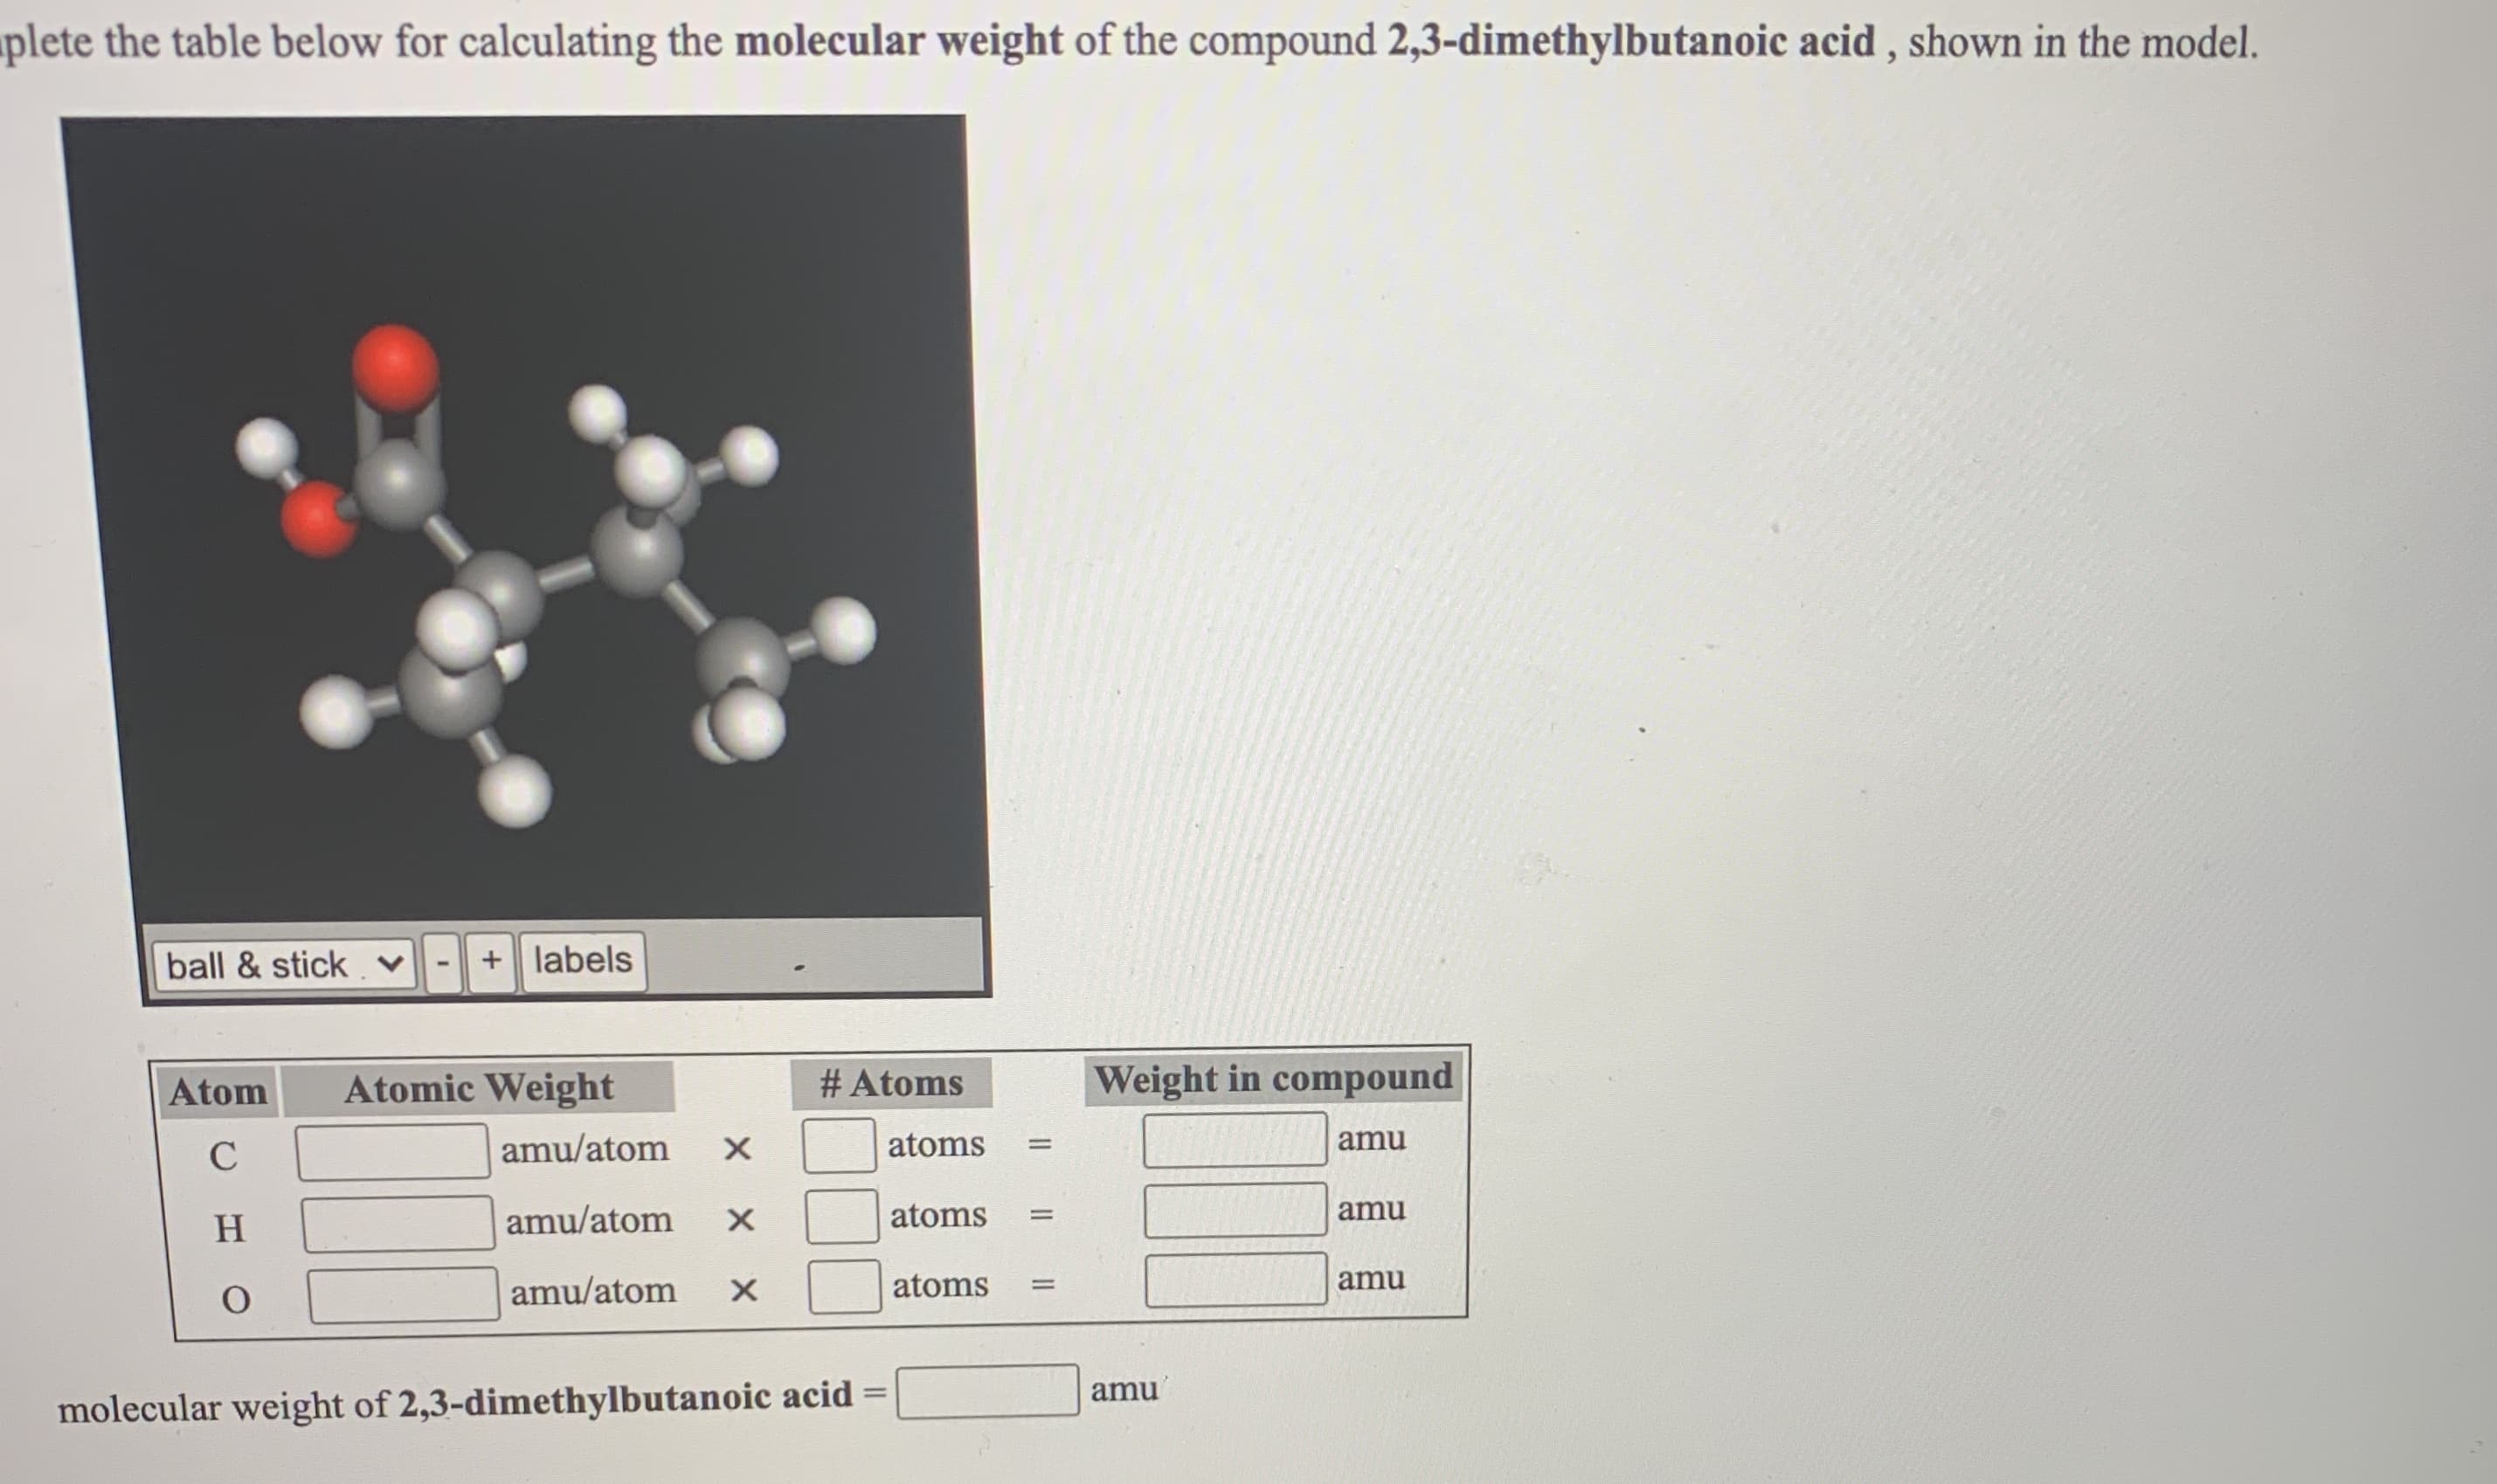 ball & stick. v
+ labels
Atom
Atomic Weight
# Atoms
Weight in compound
C
amu/atom
atoms
amu
H
amu/atom
atoms
amu
amu/atom
atoms
amu
amu
%3D
molecular weight of 2,3-dimethylbutanoic acid =
